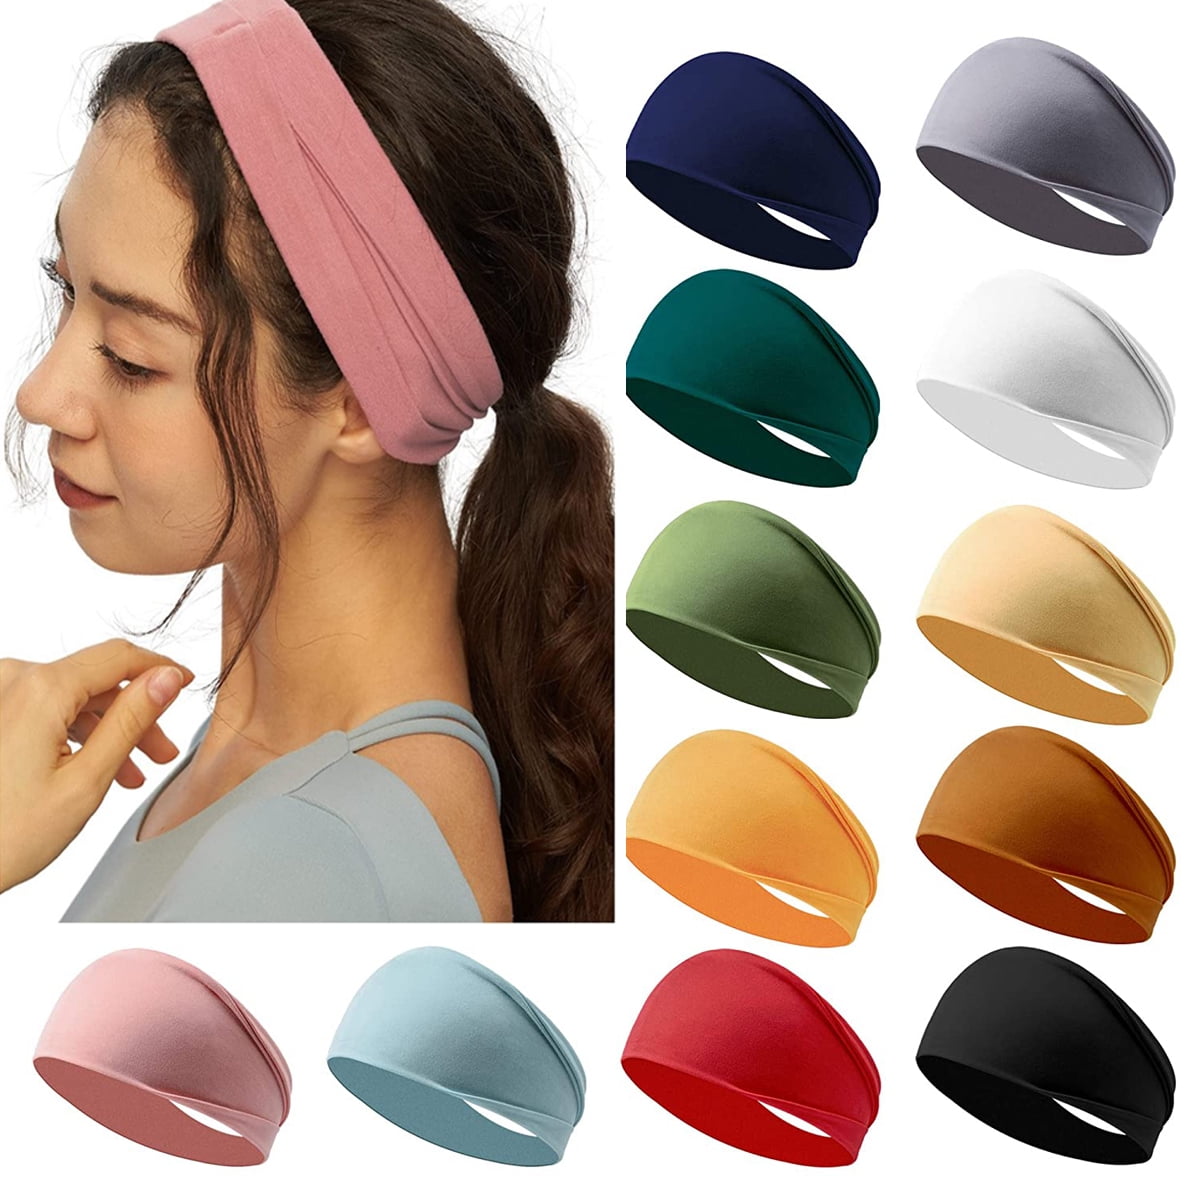 9-Pack Women Girls Fashion Elastic Headbands Head-Wraps Assorted Colors 